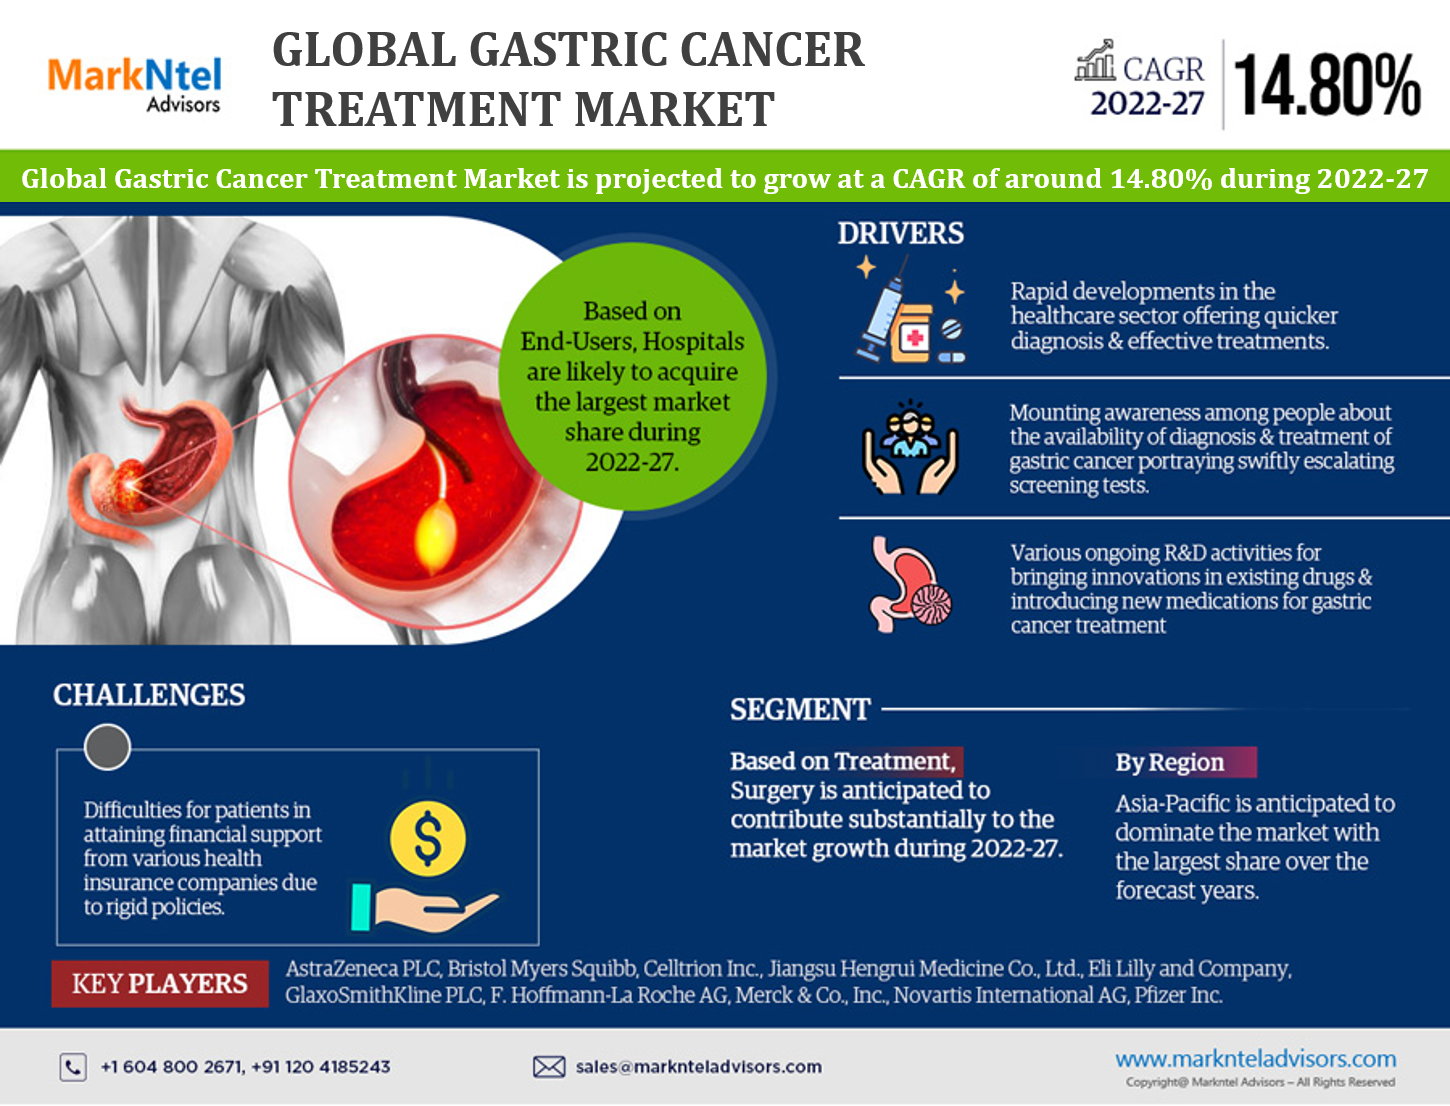 Global Gastric Cancer Treatments Market